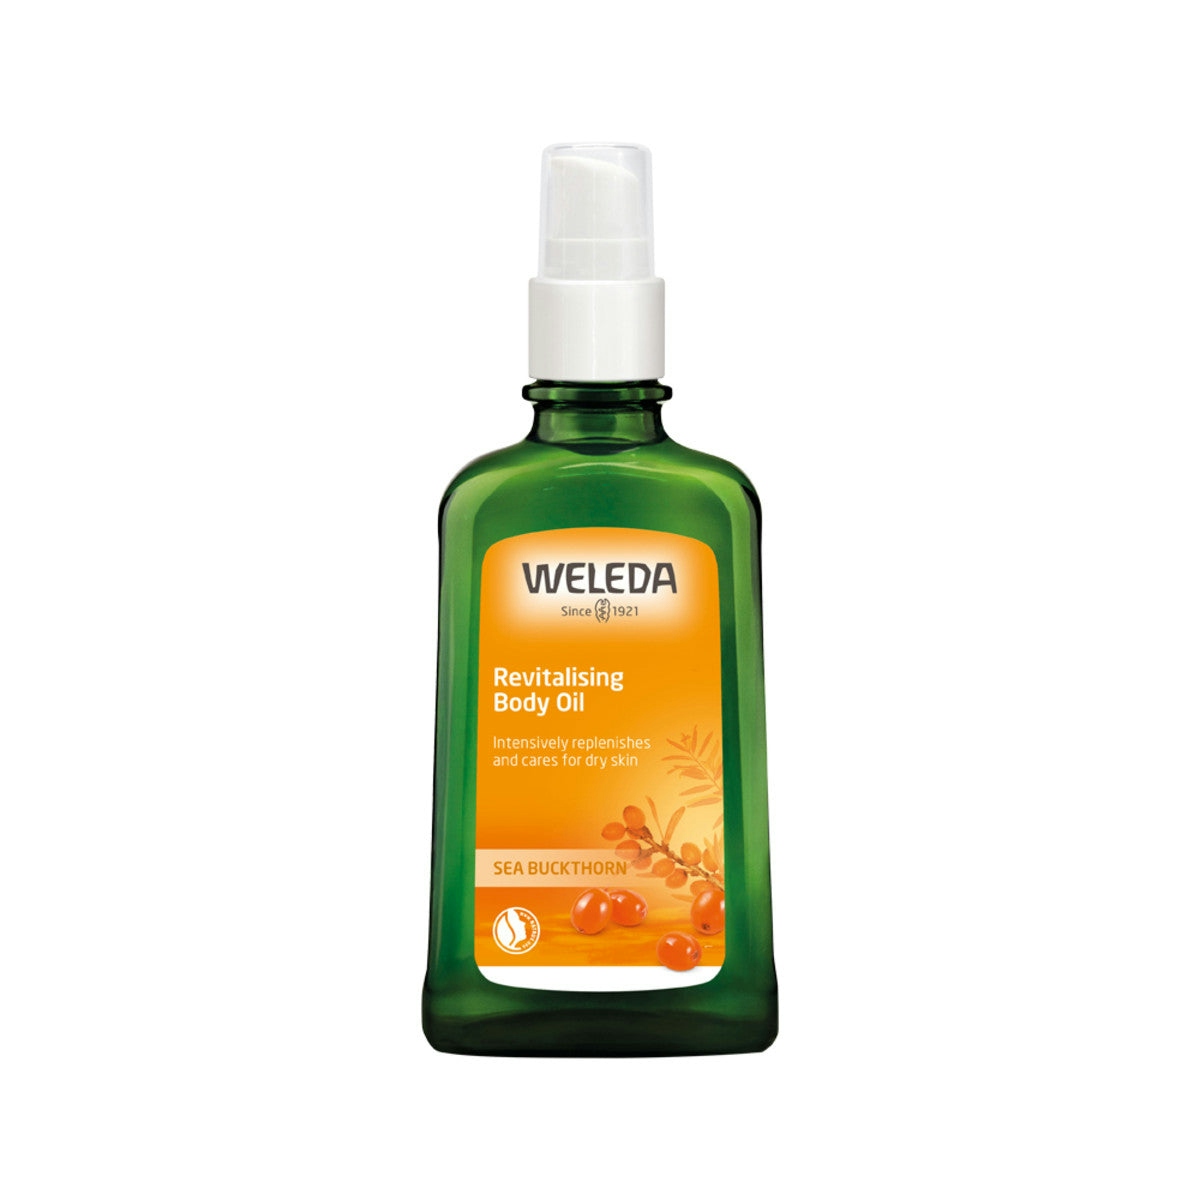 image of Weleda Body Oil Revitalising (Sea Buckthorn) 100ml on white background